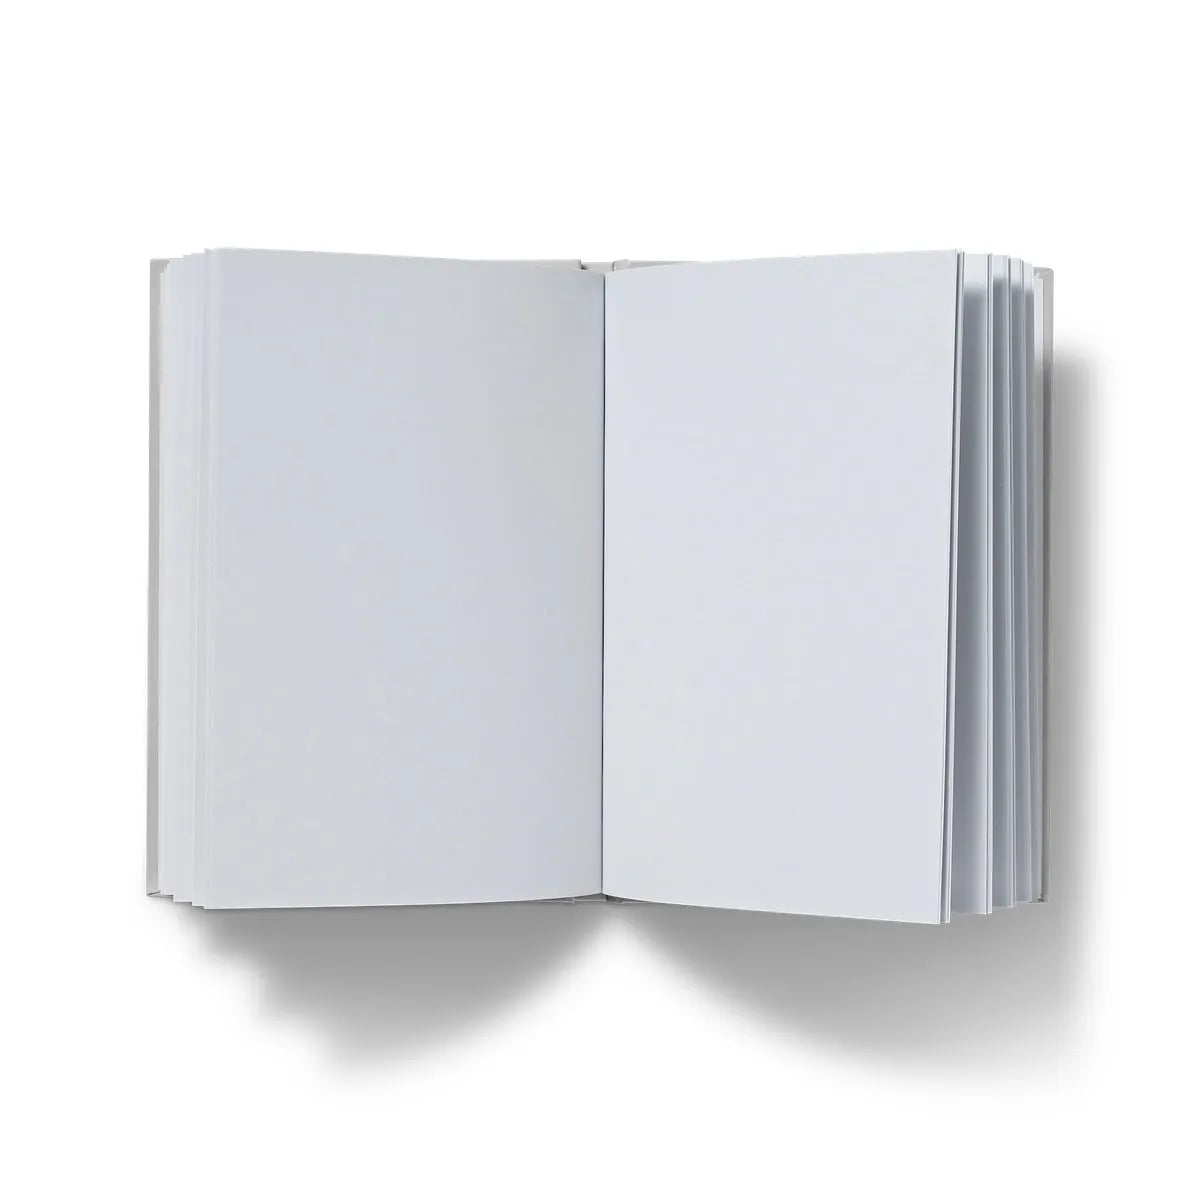 Just The Headlines Hardback Journal - Notebooks & Notepads - Aesthetic Art